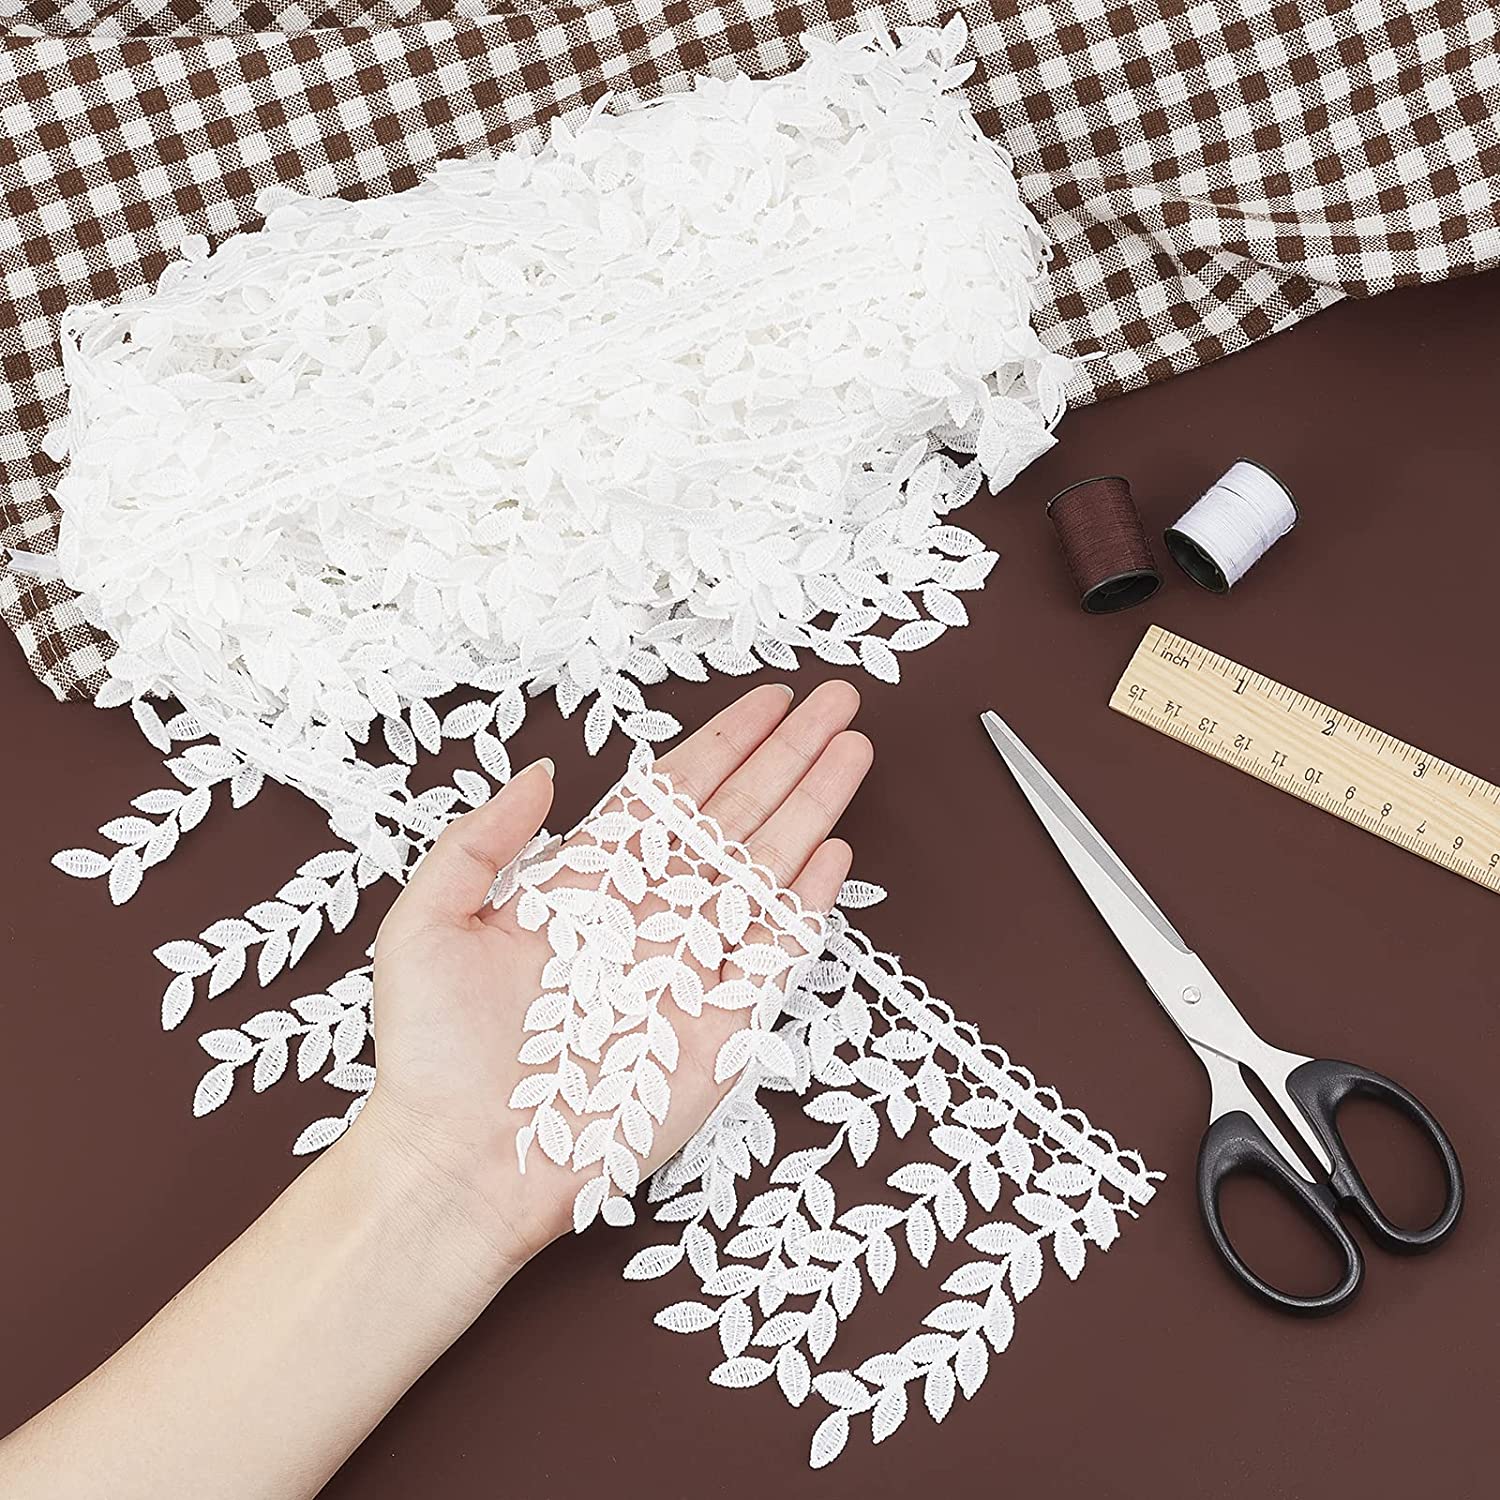 7.5 Yards Lace Trim with Leaf Tassel Ribbon White Sewing Fringe Trim Crafts Decorative Trim DIY Sewing Craft Lace Trim for Wedding Bridal Dress Party Clothes Decoration